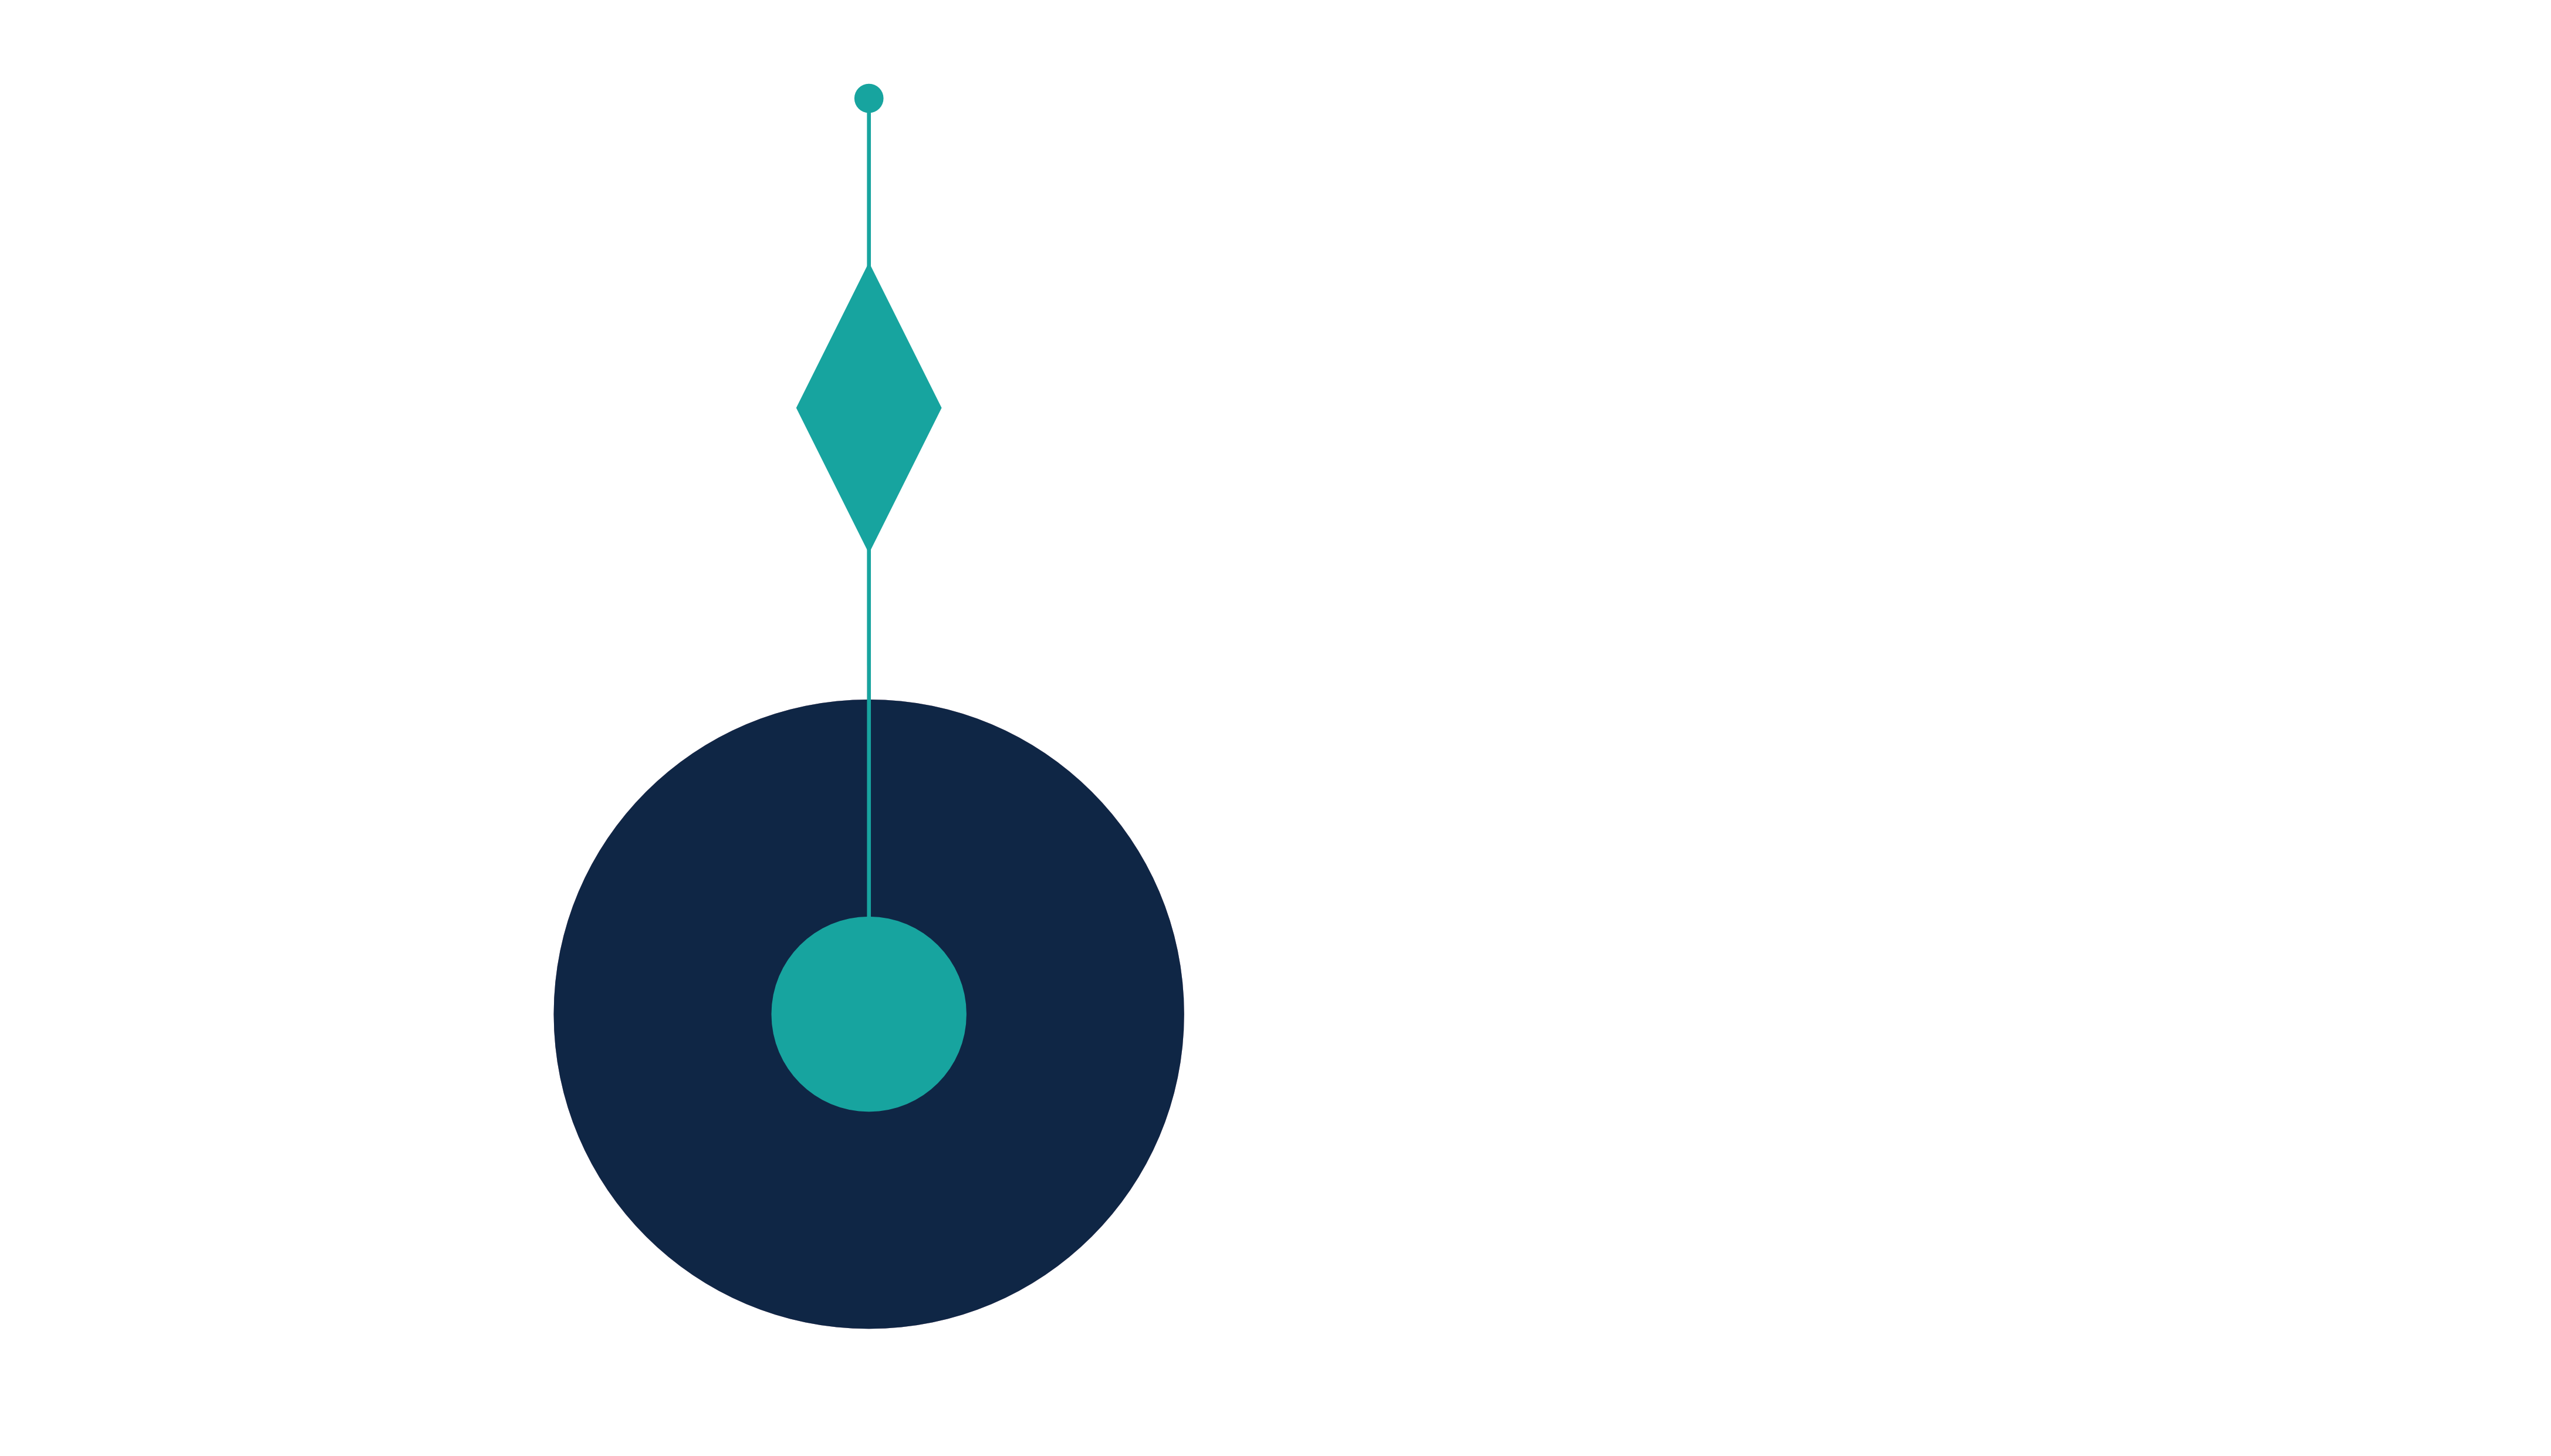 Syzygy - Workshop Application